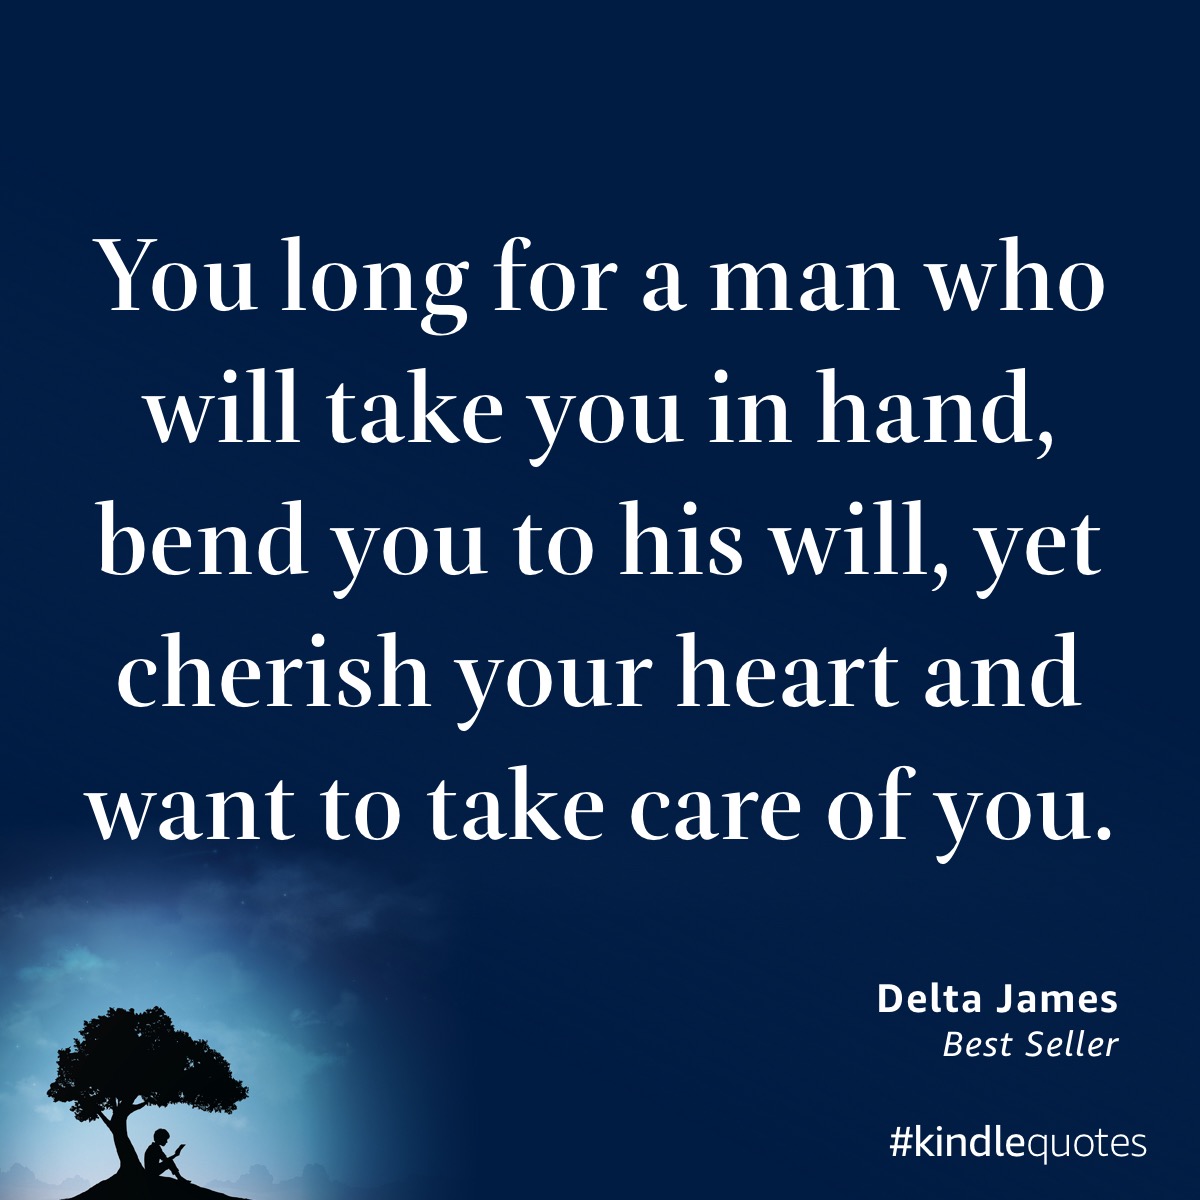 Book quote Delta James